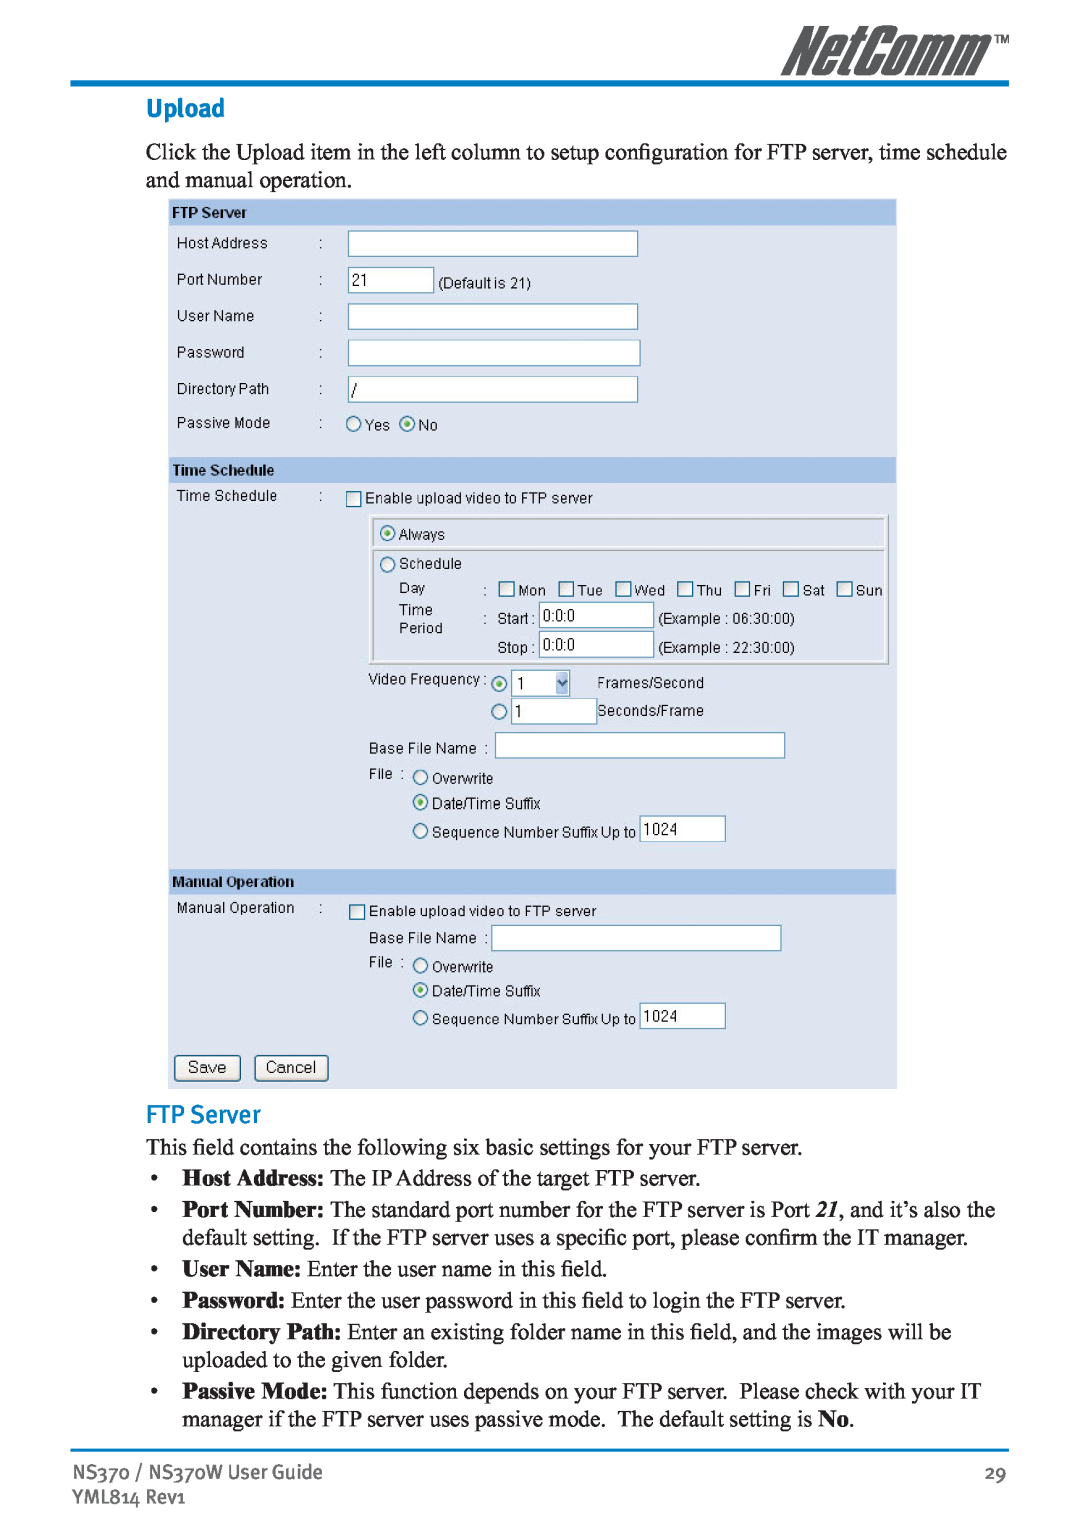 NetComm NS370W manual Upload, FTP Server 